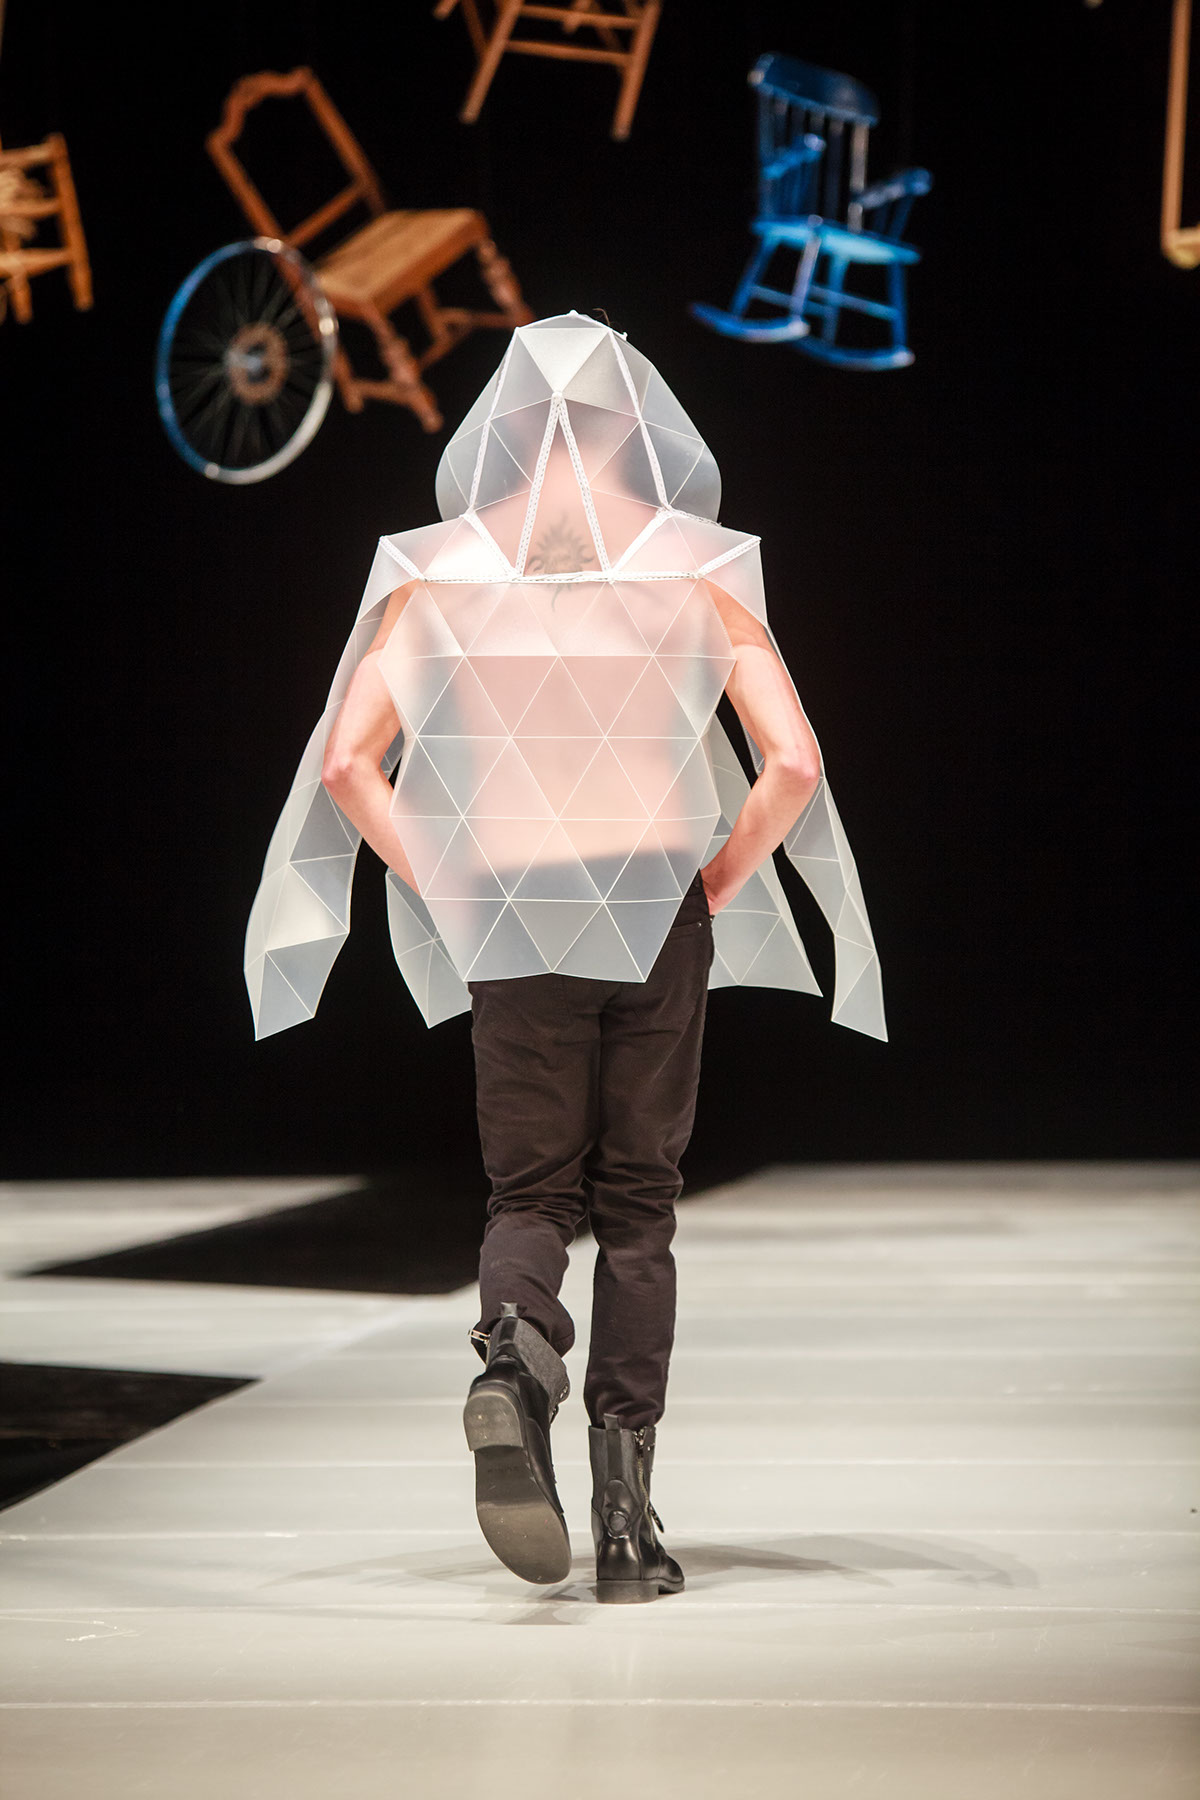 fashionshow tessellate Tessellation experimental Triangles modern